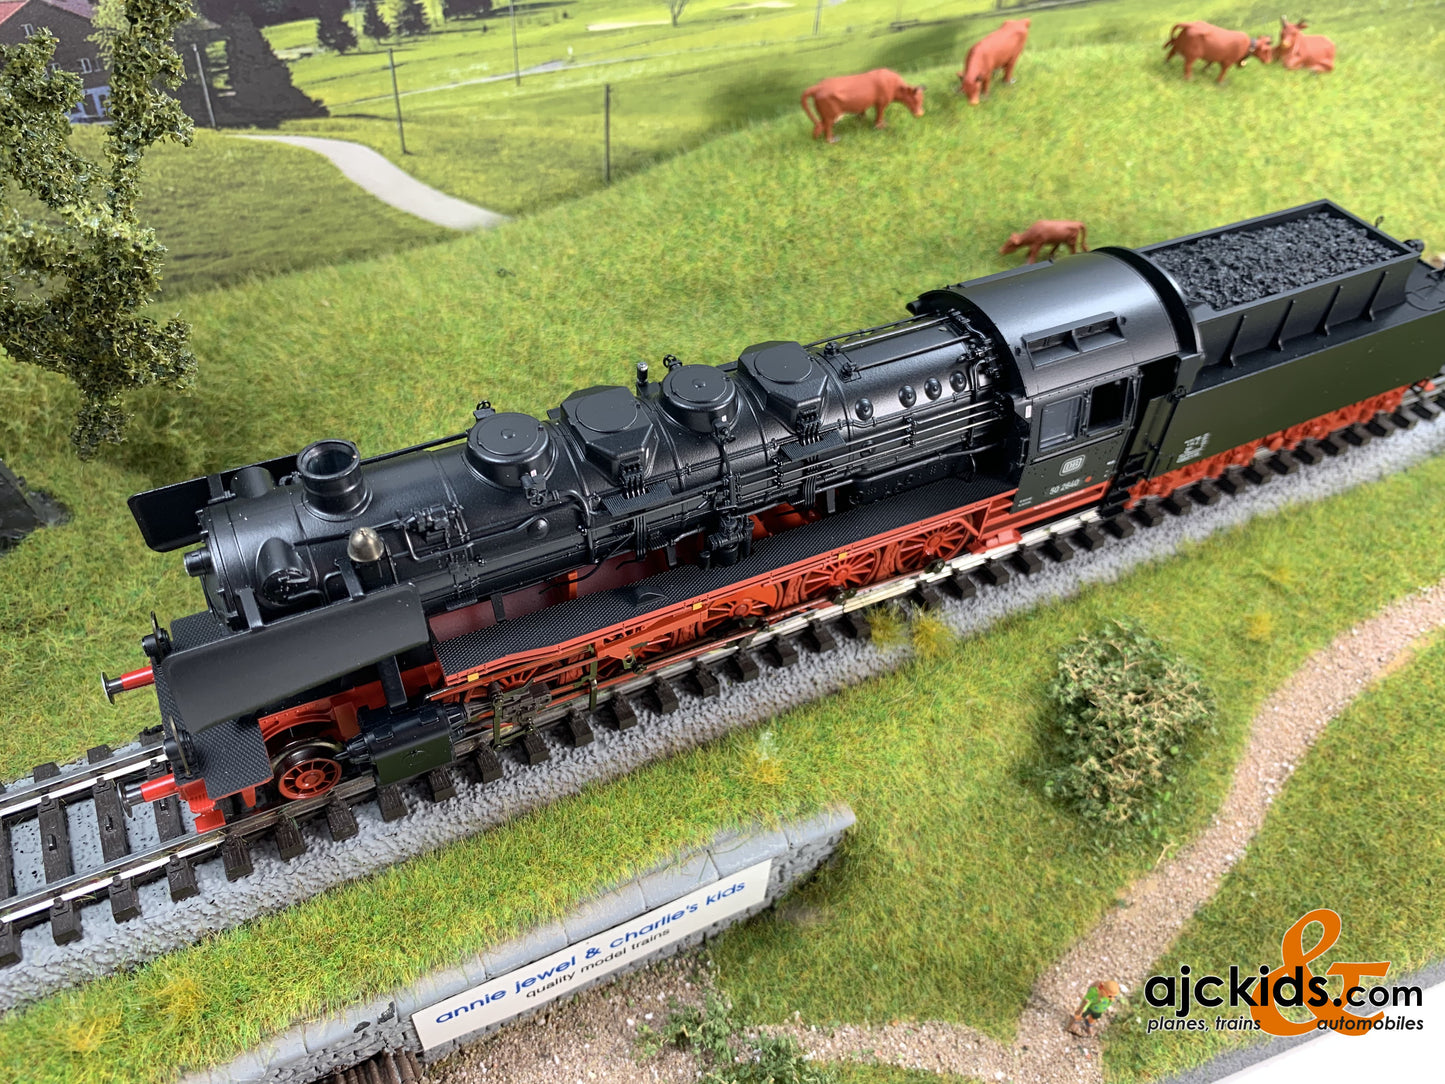 Marklin 37897 - Class 50 Steam Locomotive